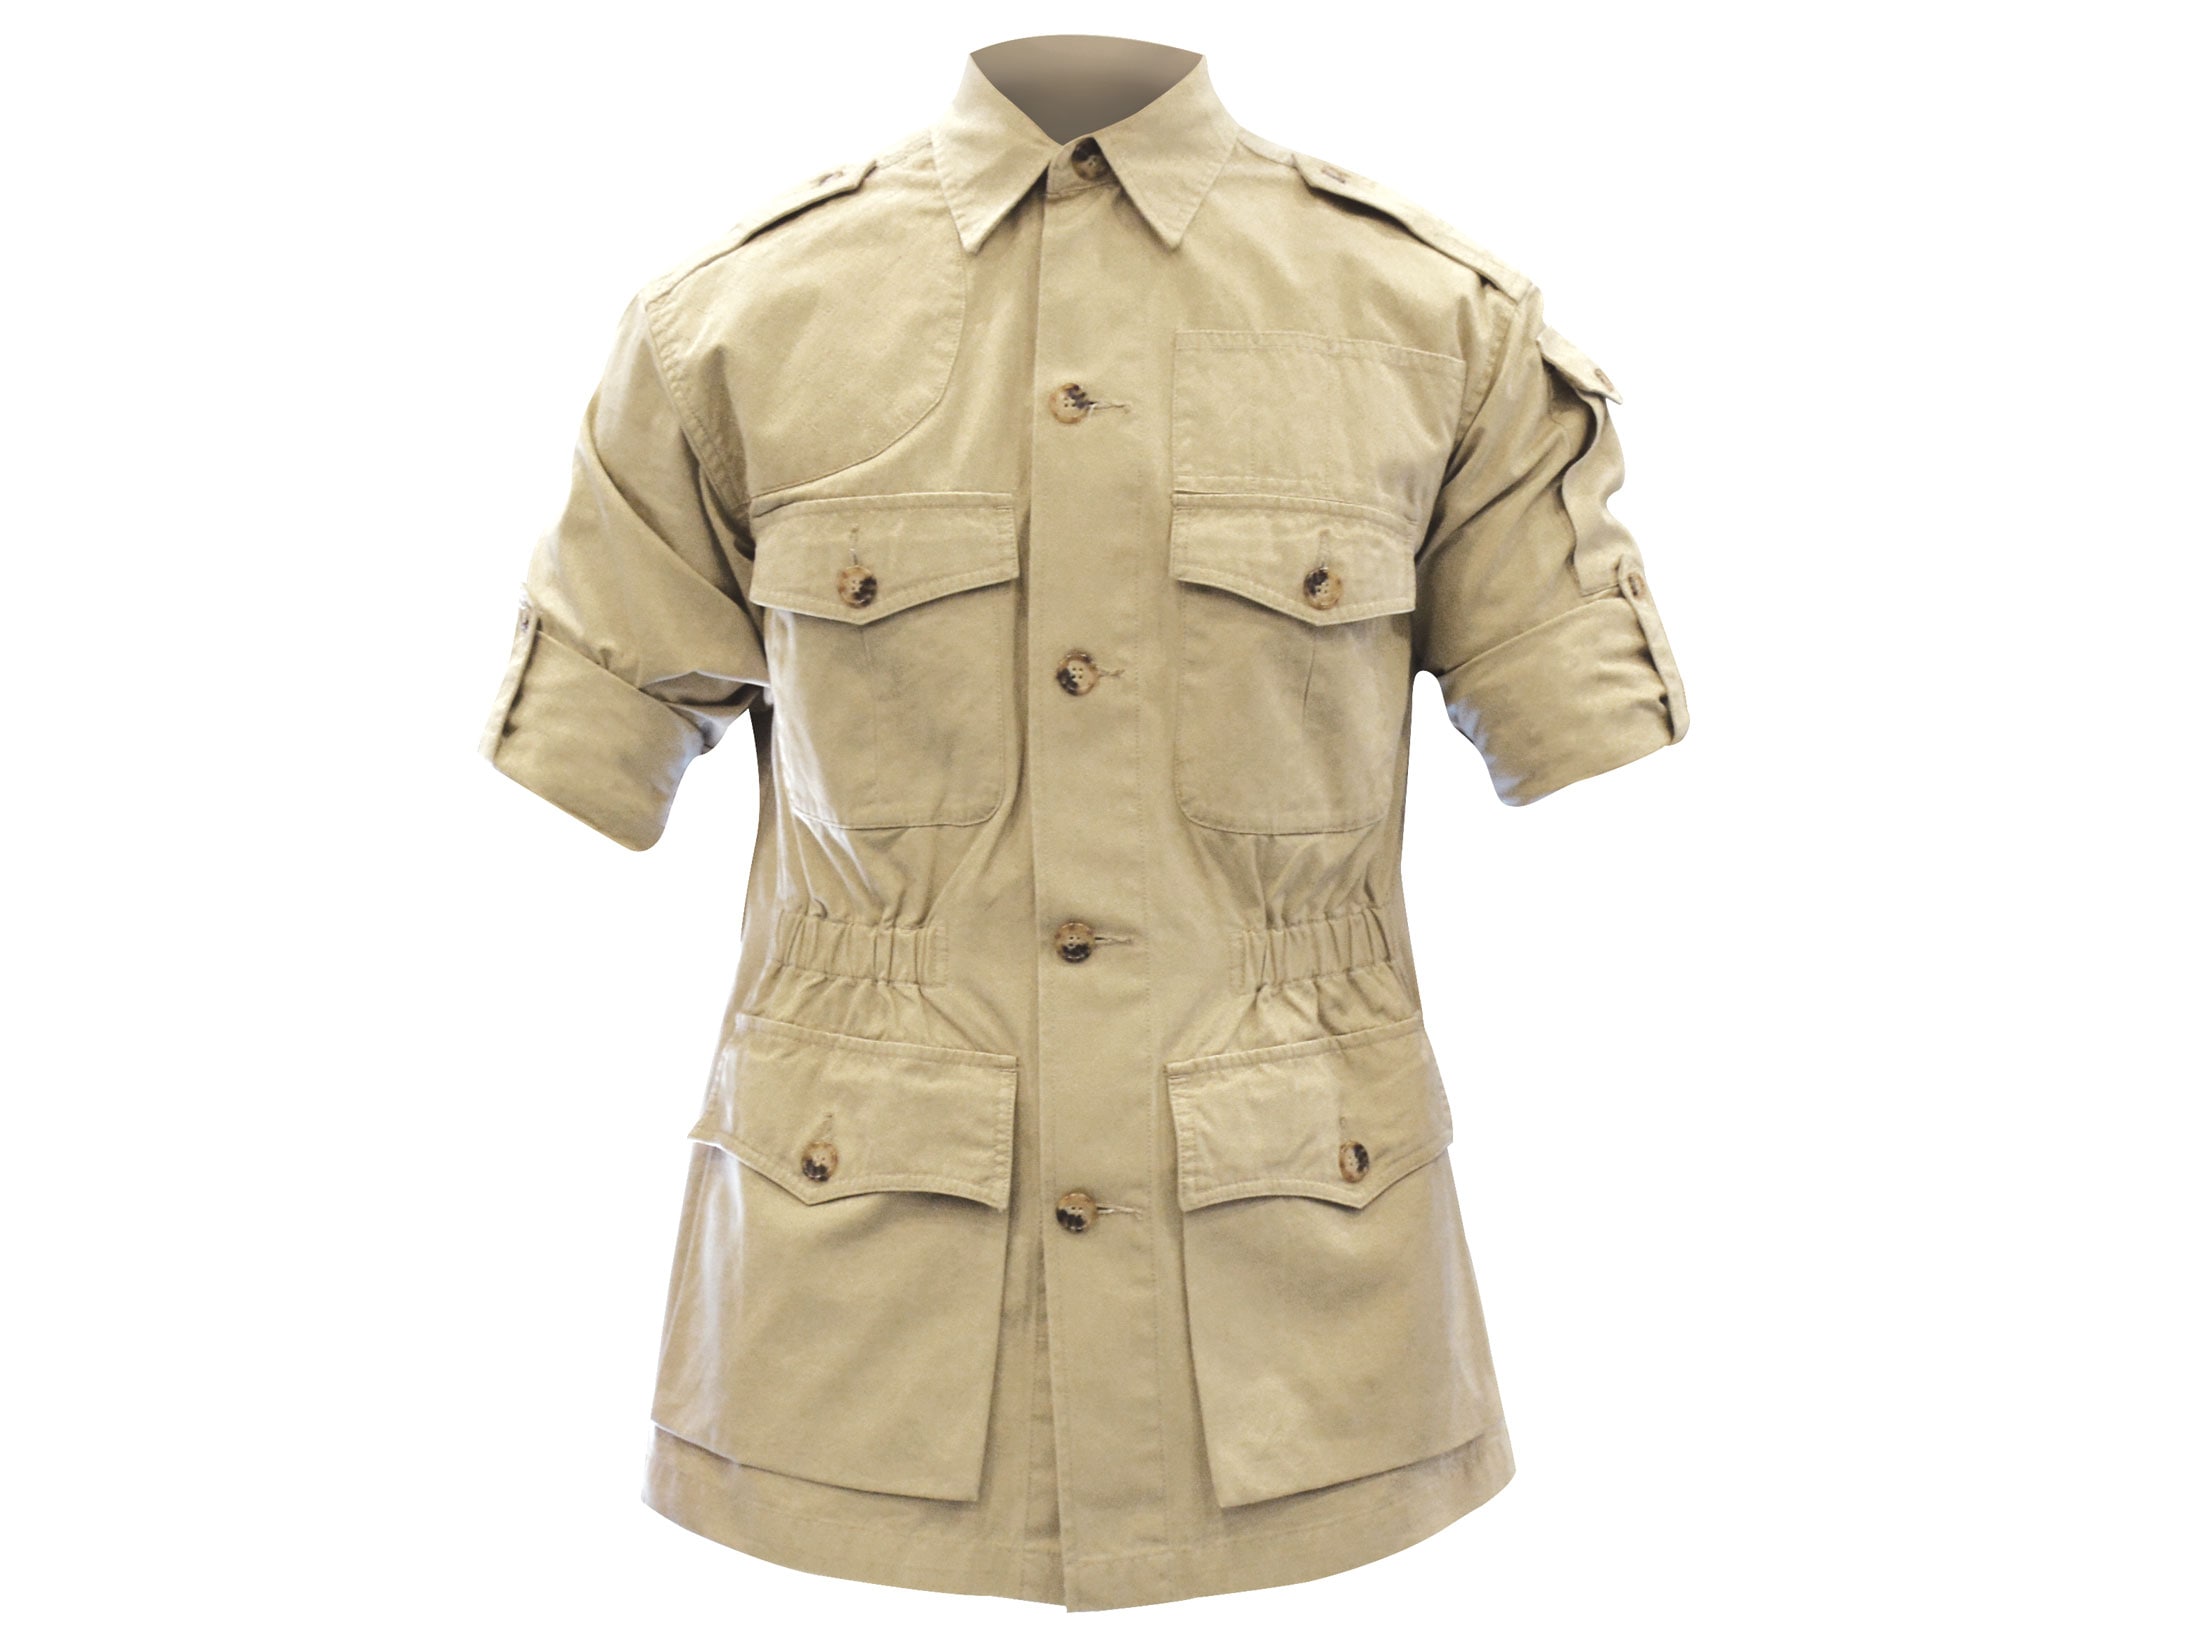 Style 101: The Safari Jacket